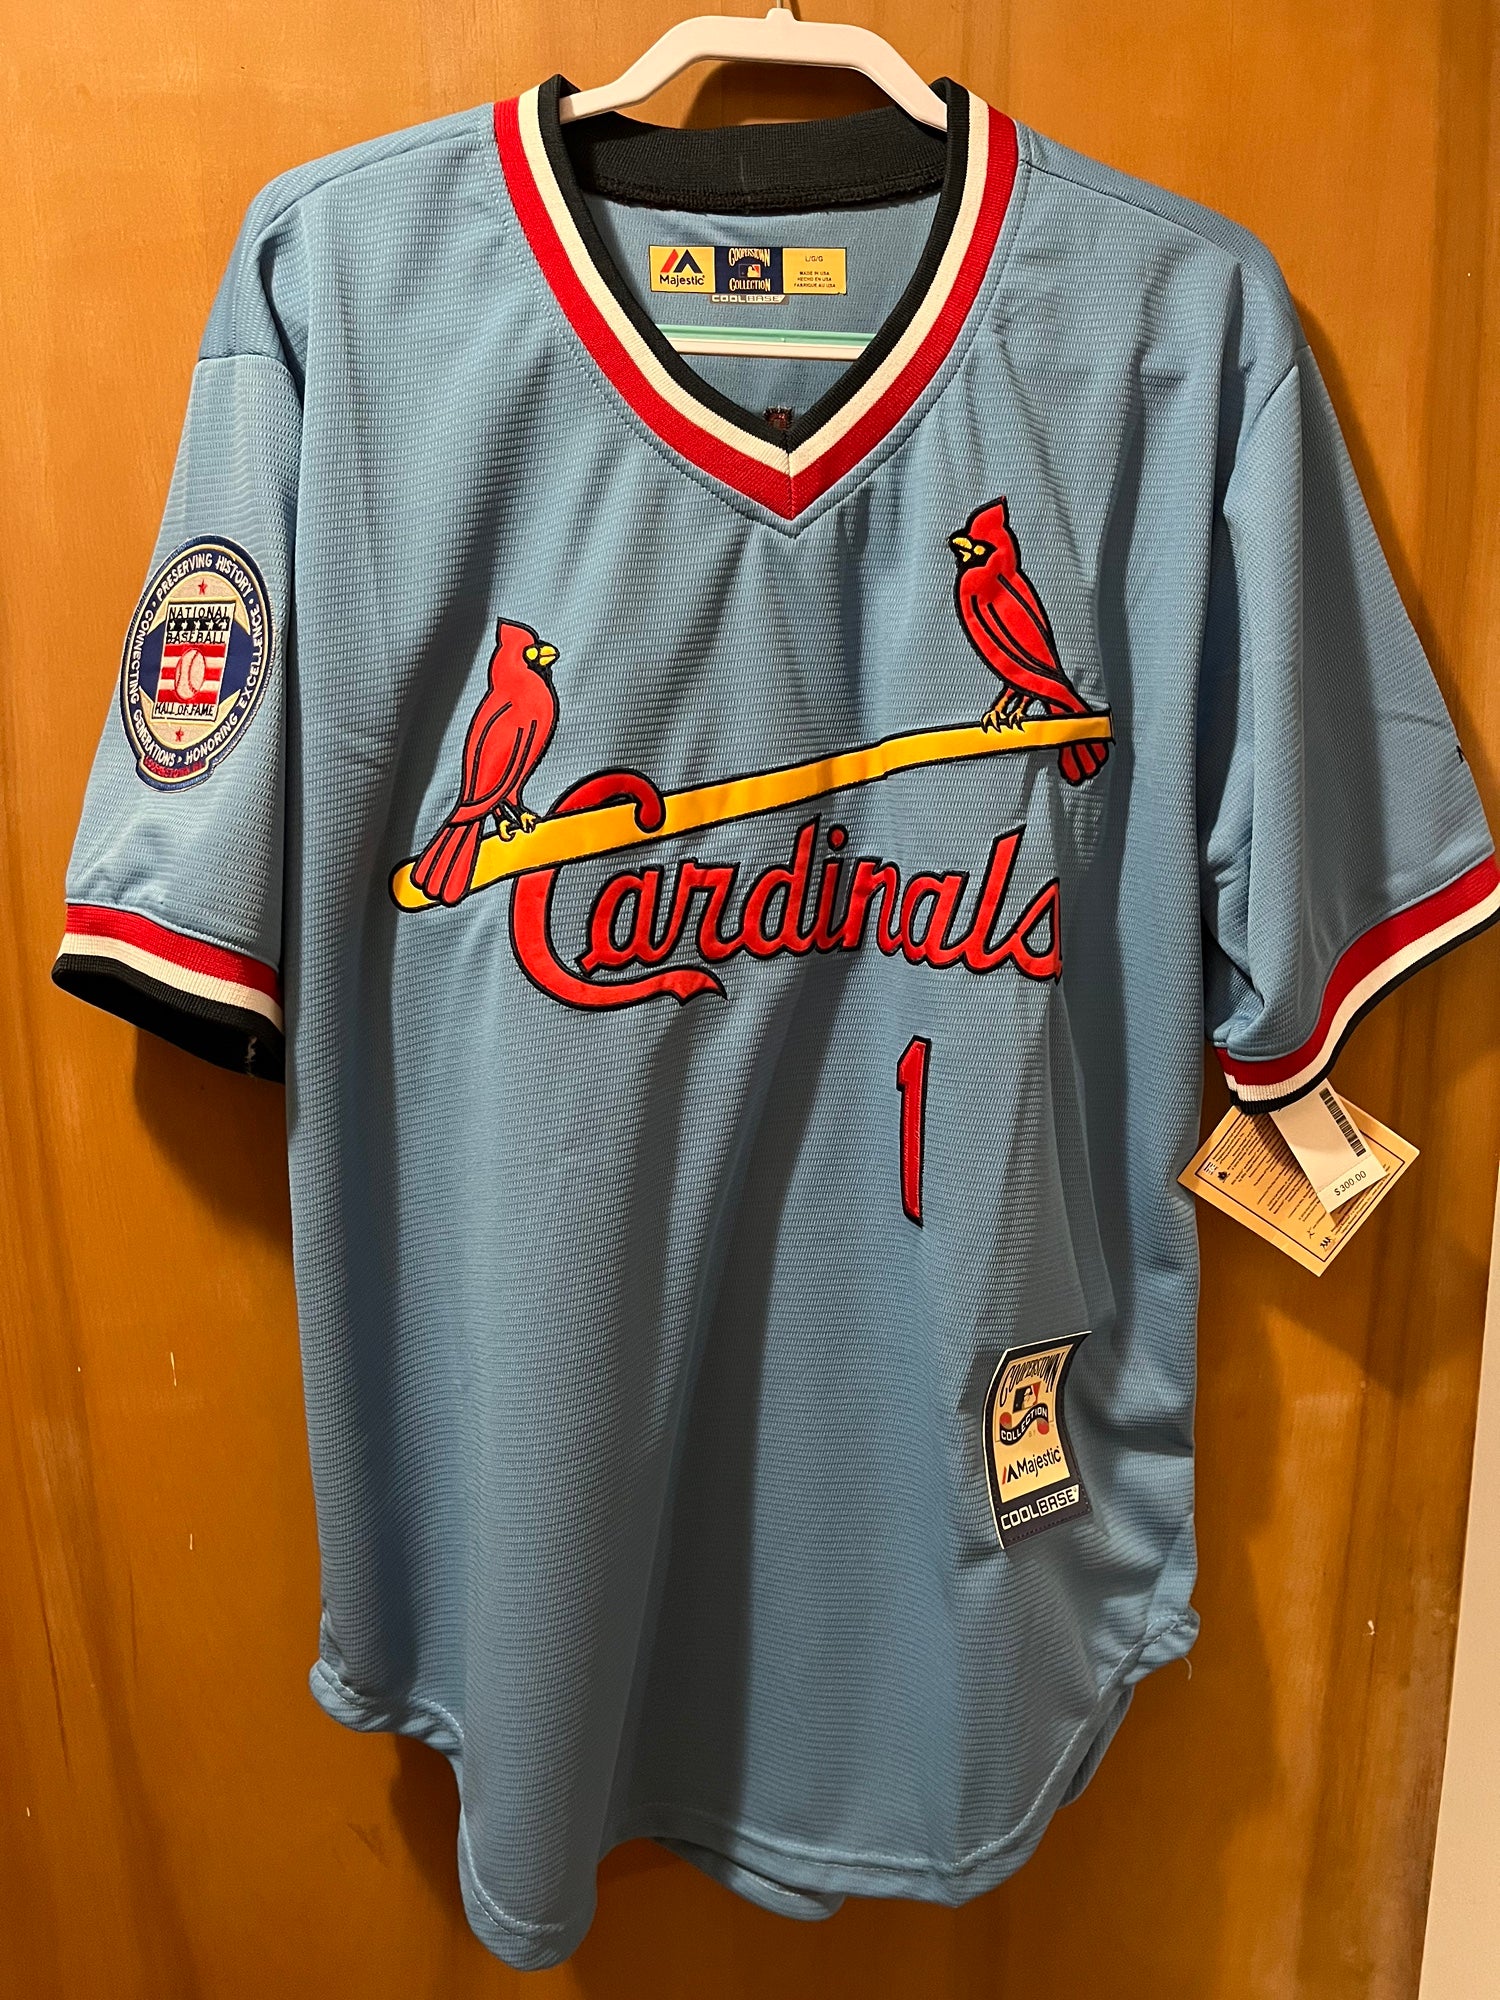 MLB St. Louis Cardinals (Ozzie Smith) Men's Cooperstown Baseball Jersey